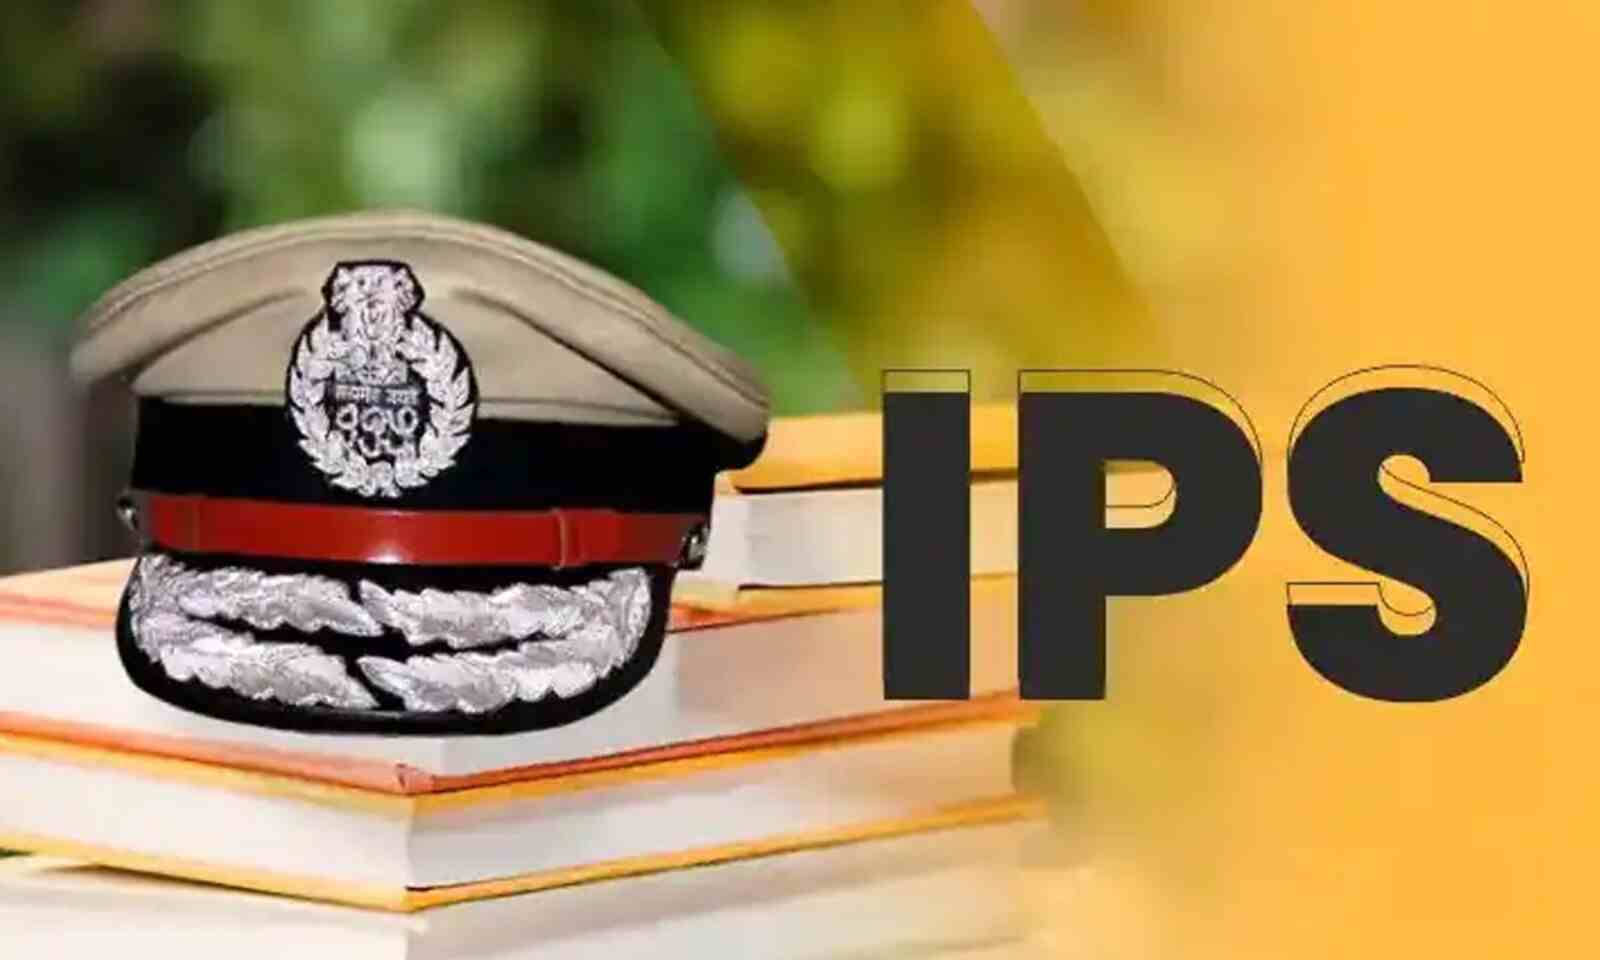 Download Ips Officer Logo Wallpaper | Wallpapers.com